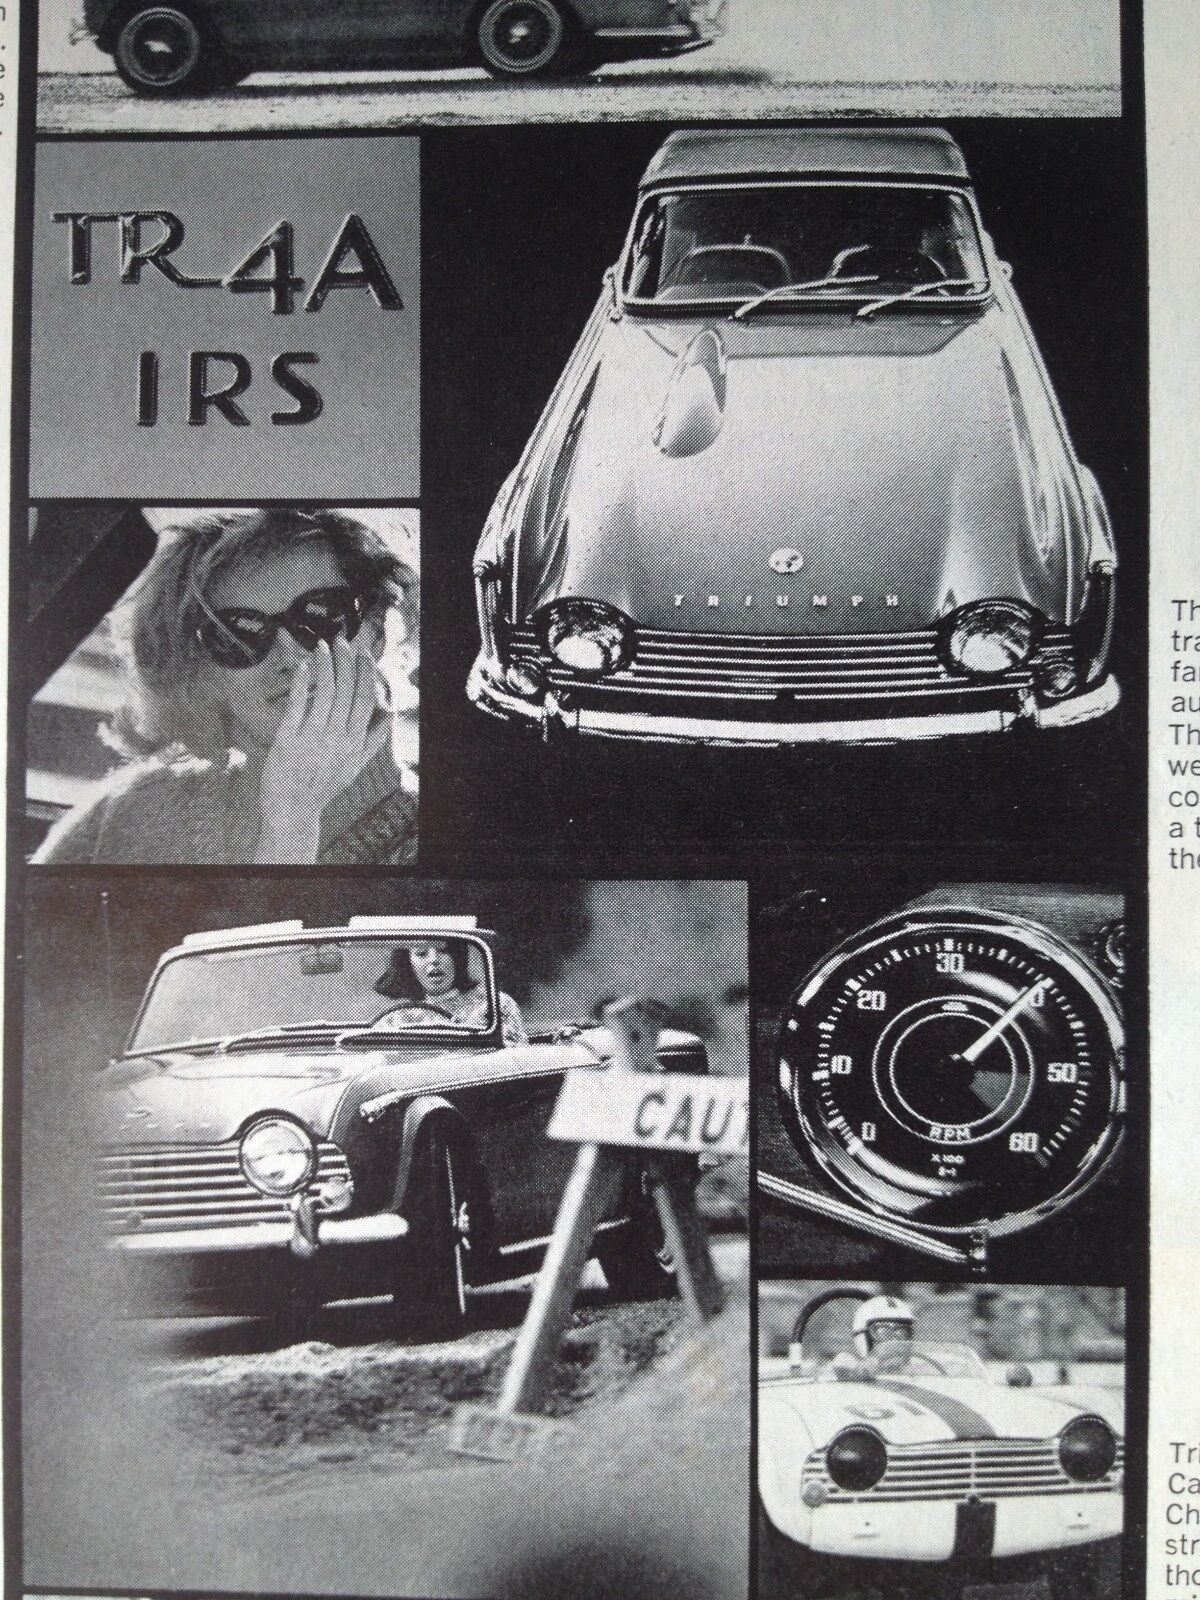 1966 Triumph TR4A  Print Ad Standard Triumph Motor Co.